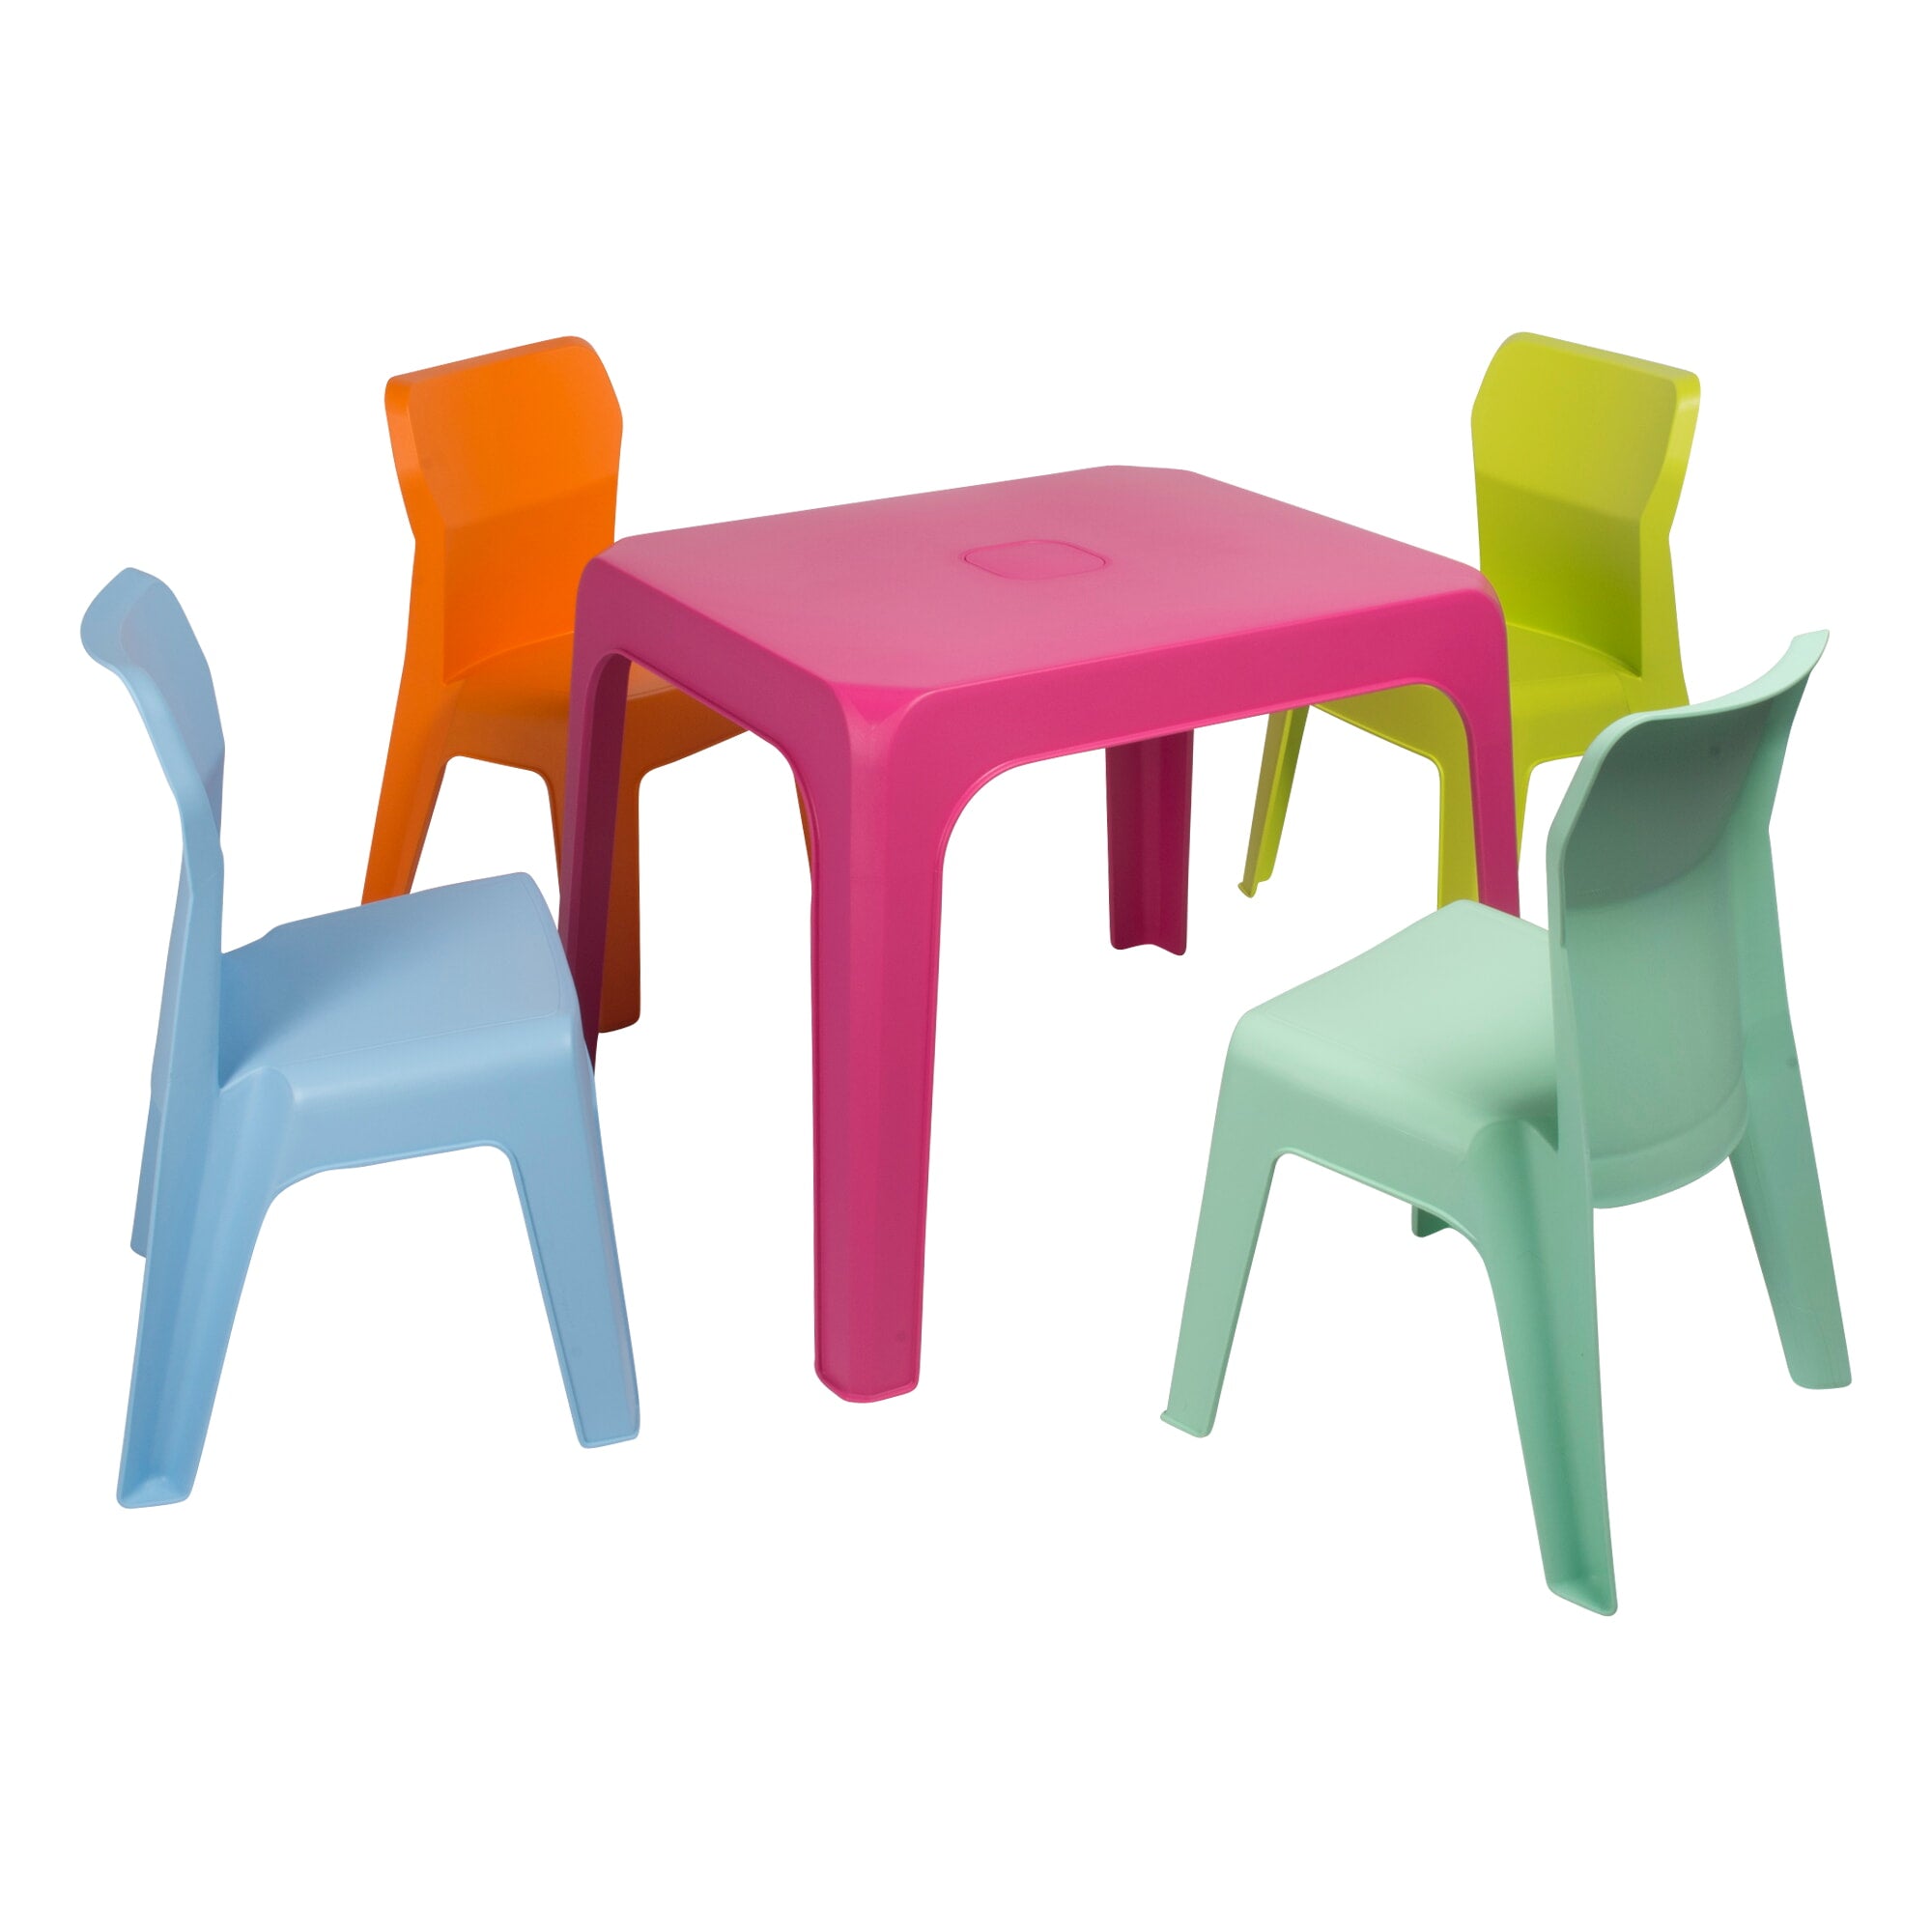 Garbar kinderstoel en tafel set 4+1 hemelsblauw oranje